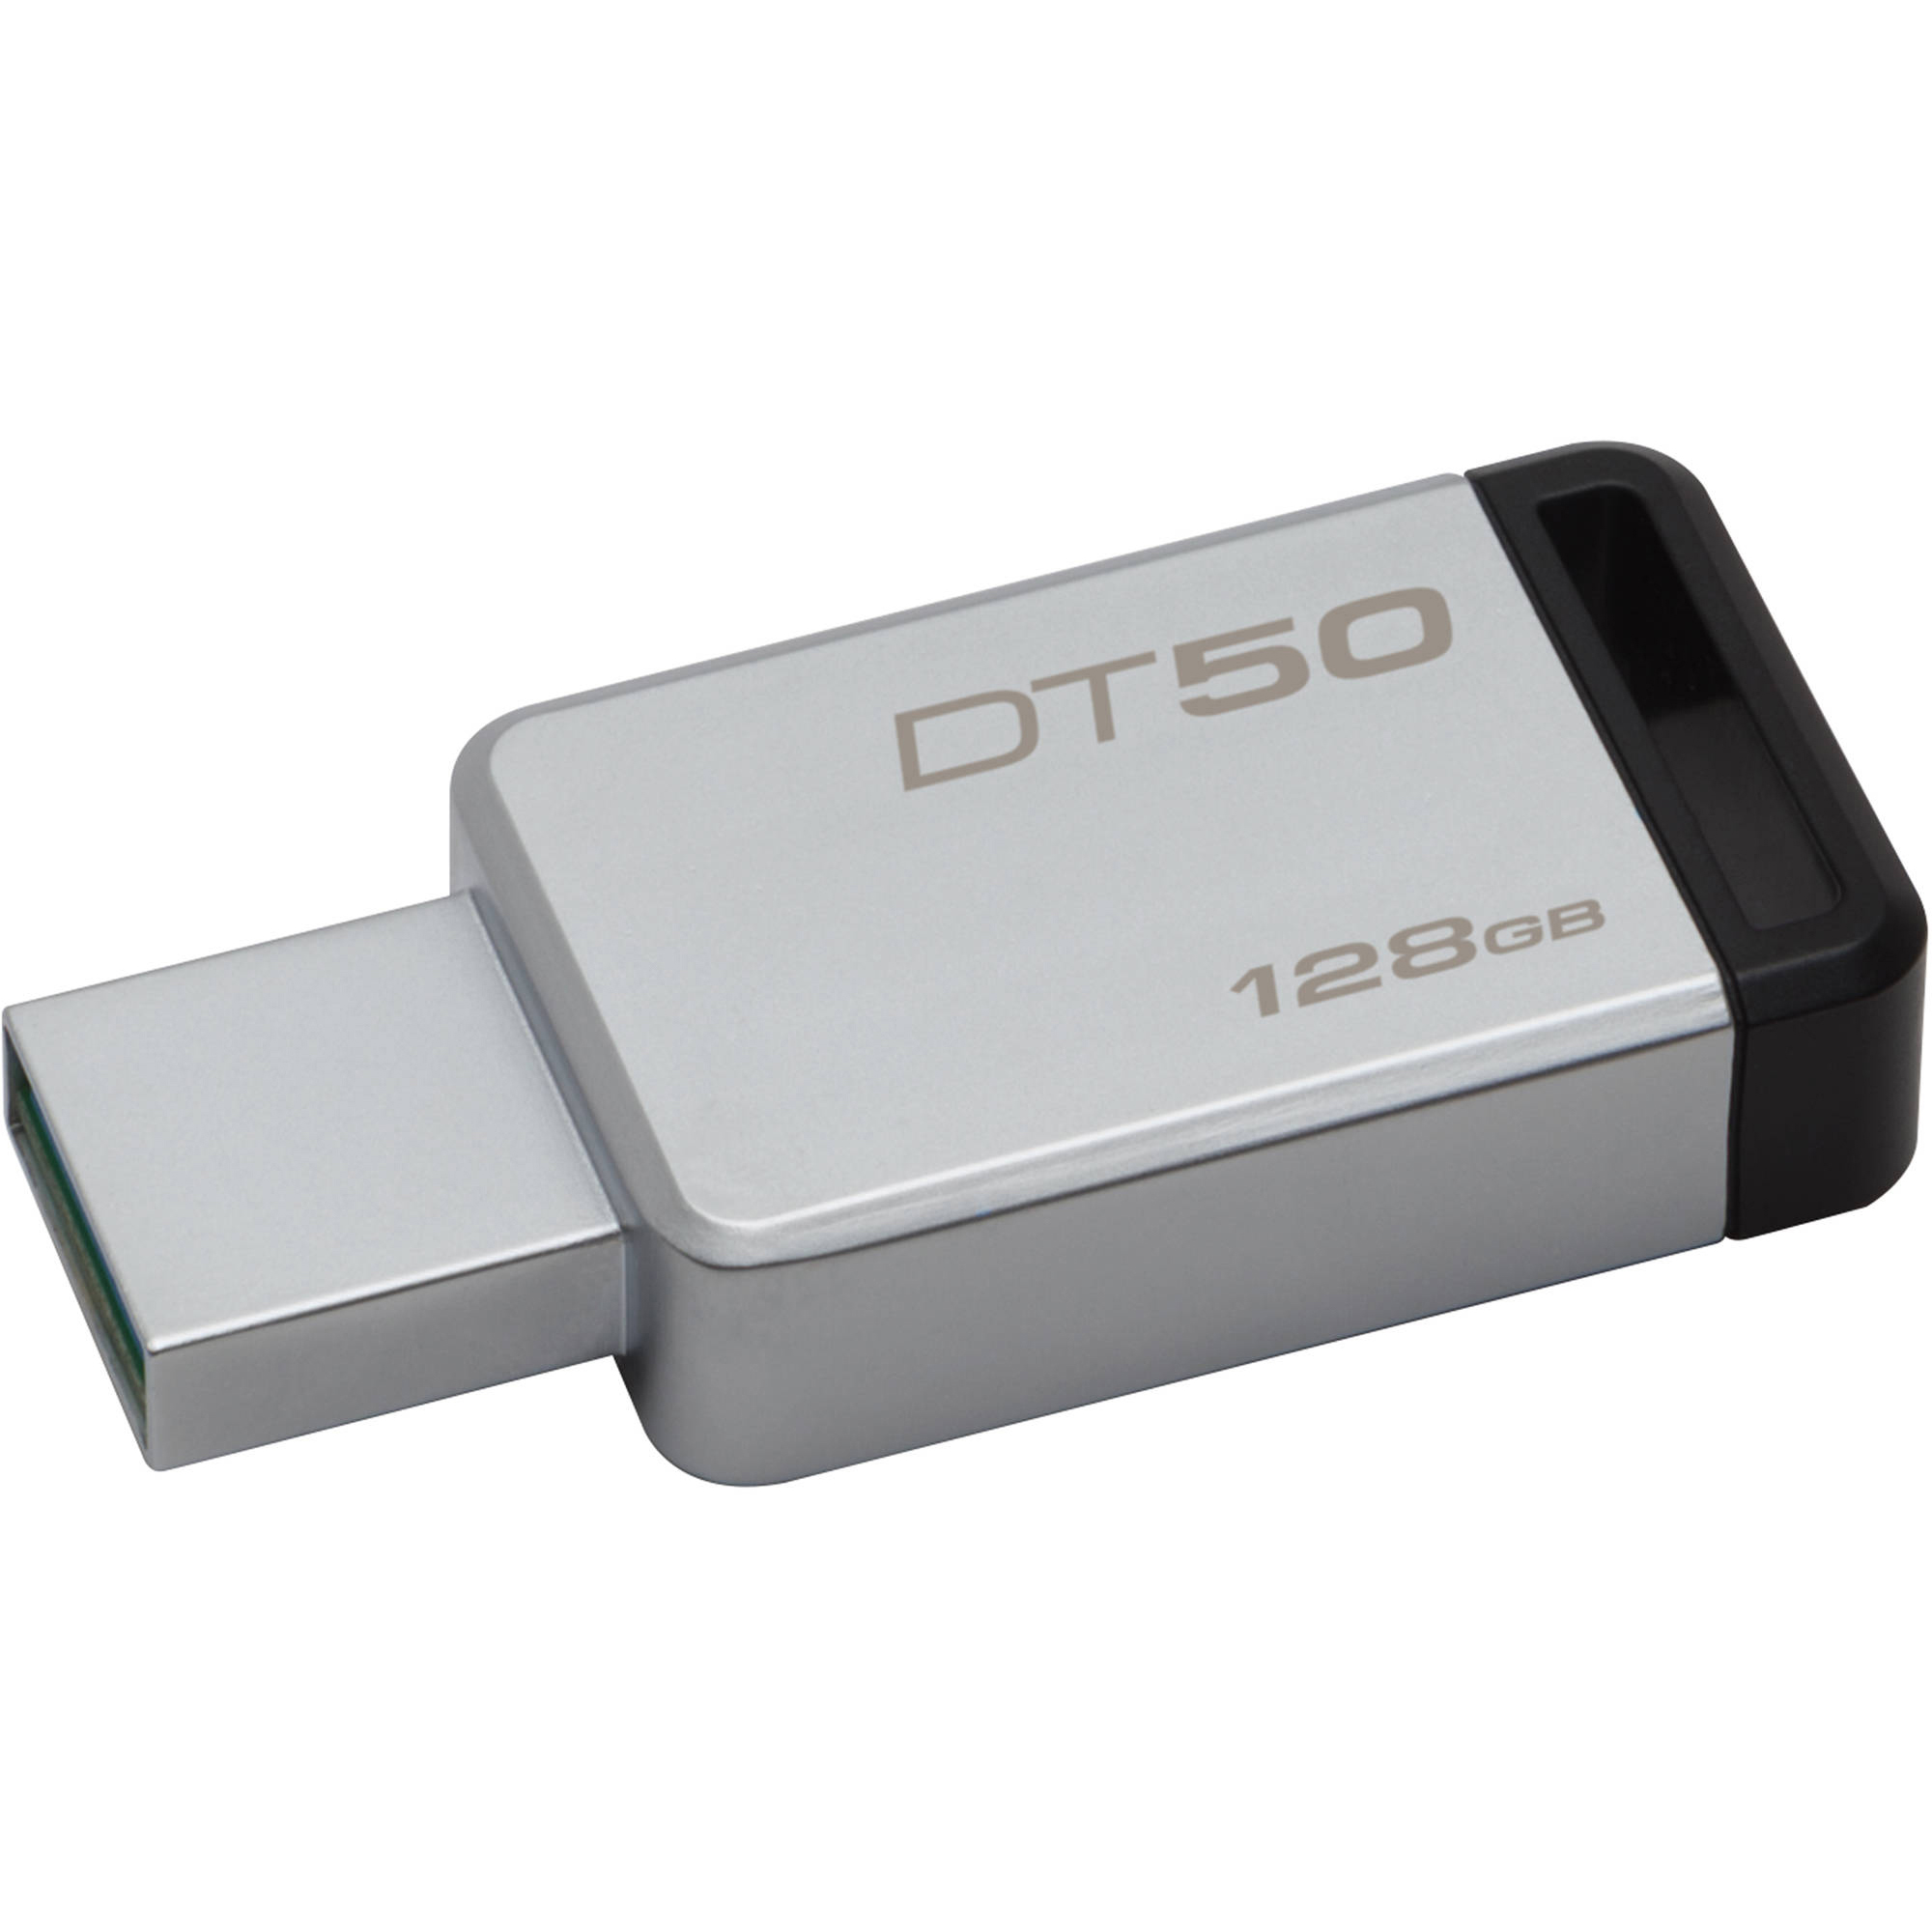 Original Kingston DataTraveler 50 128GB USB 3.0 Flash Drive (DT50/128GB)